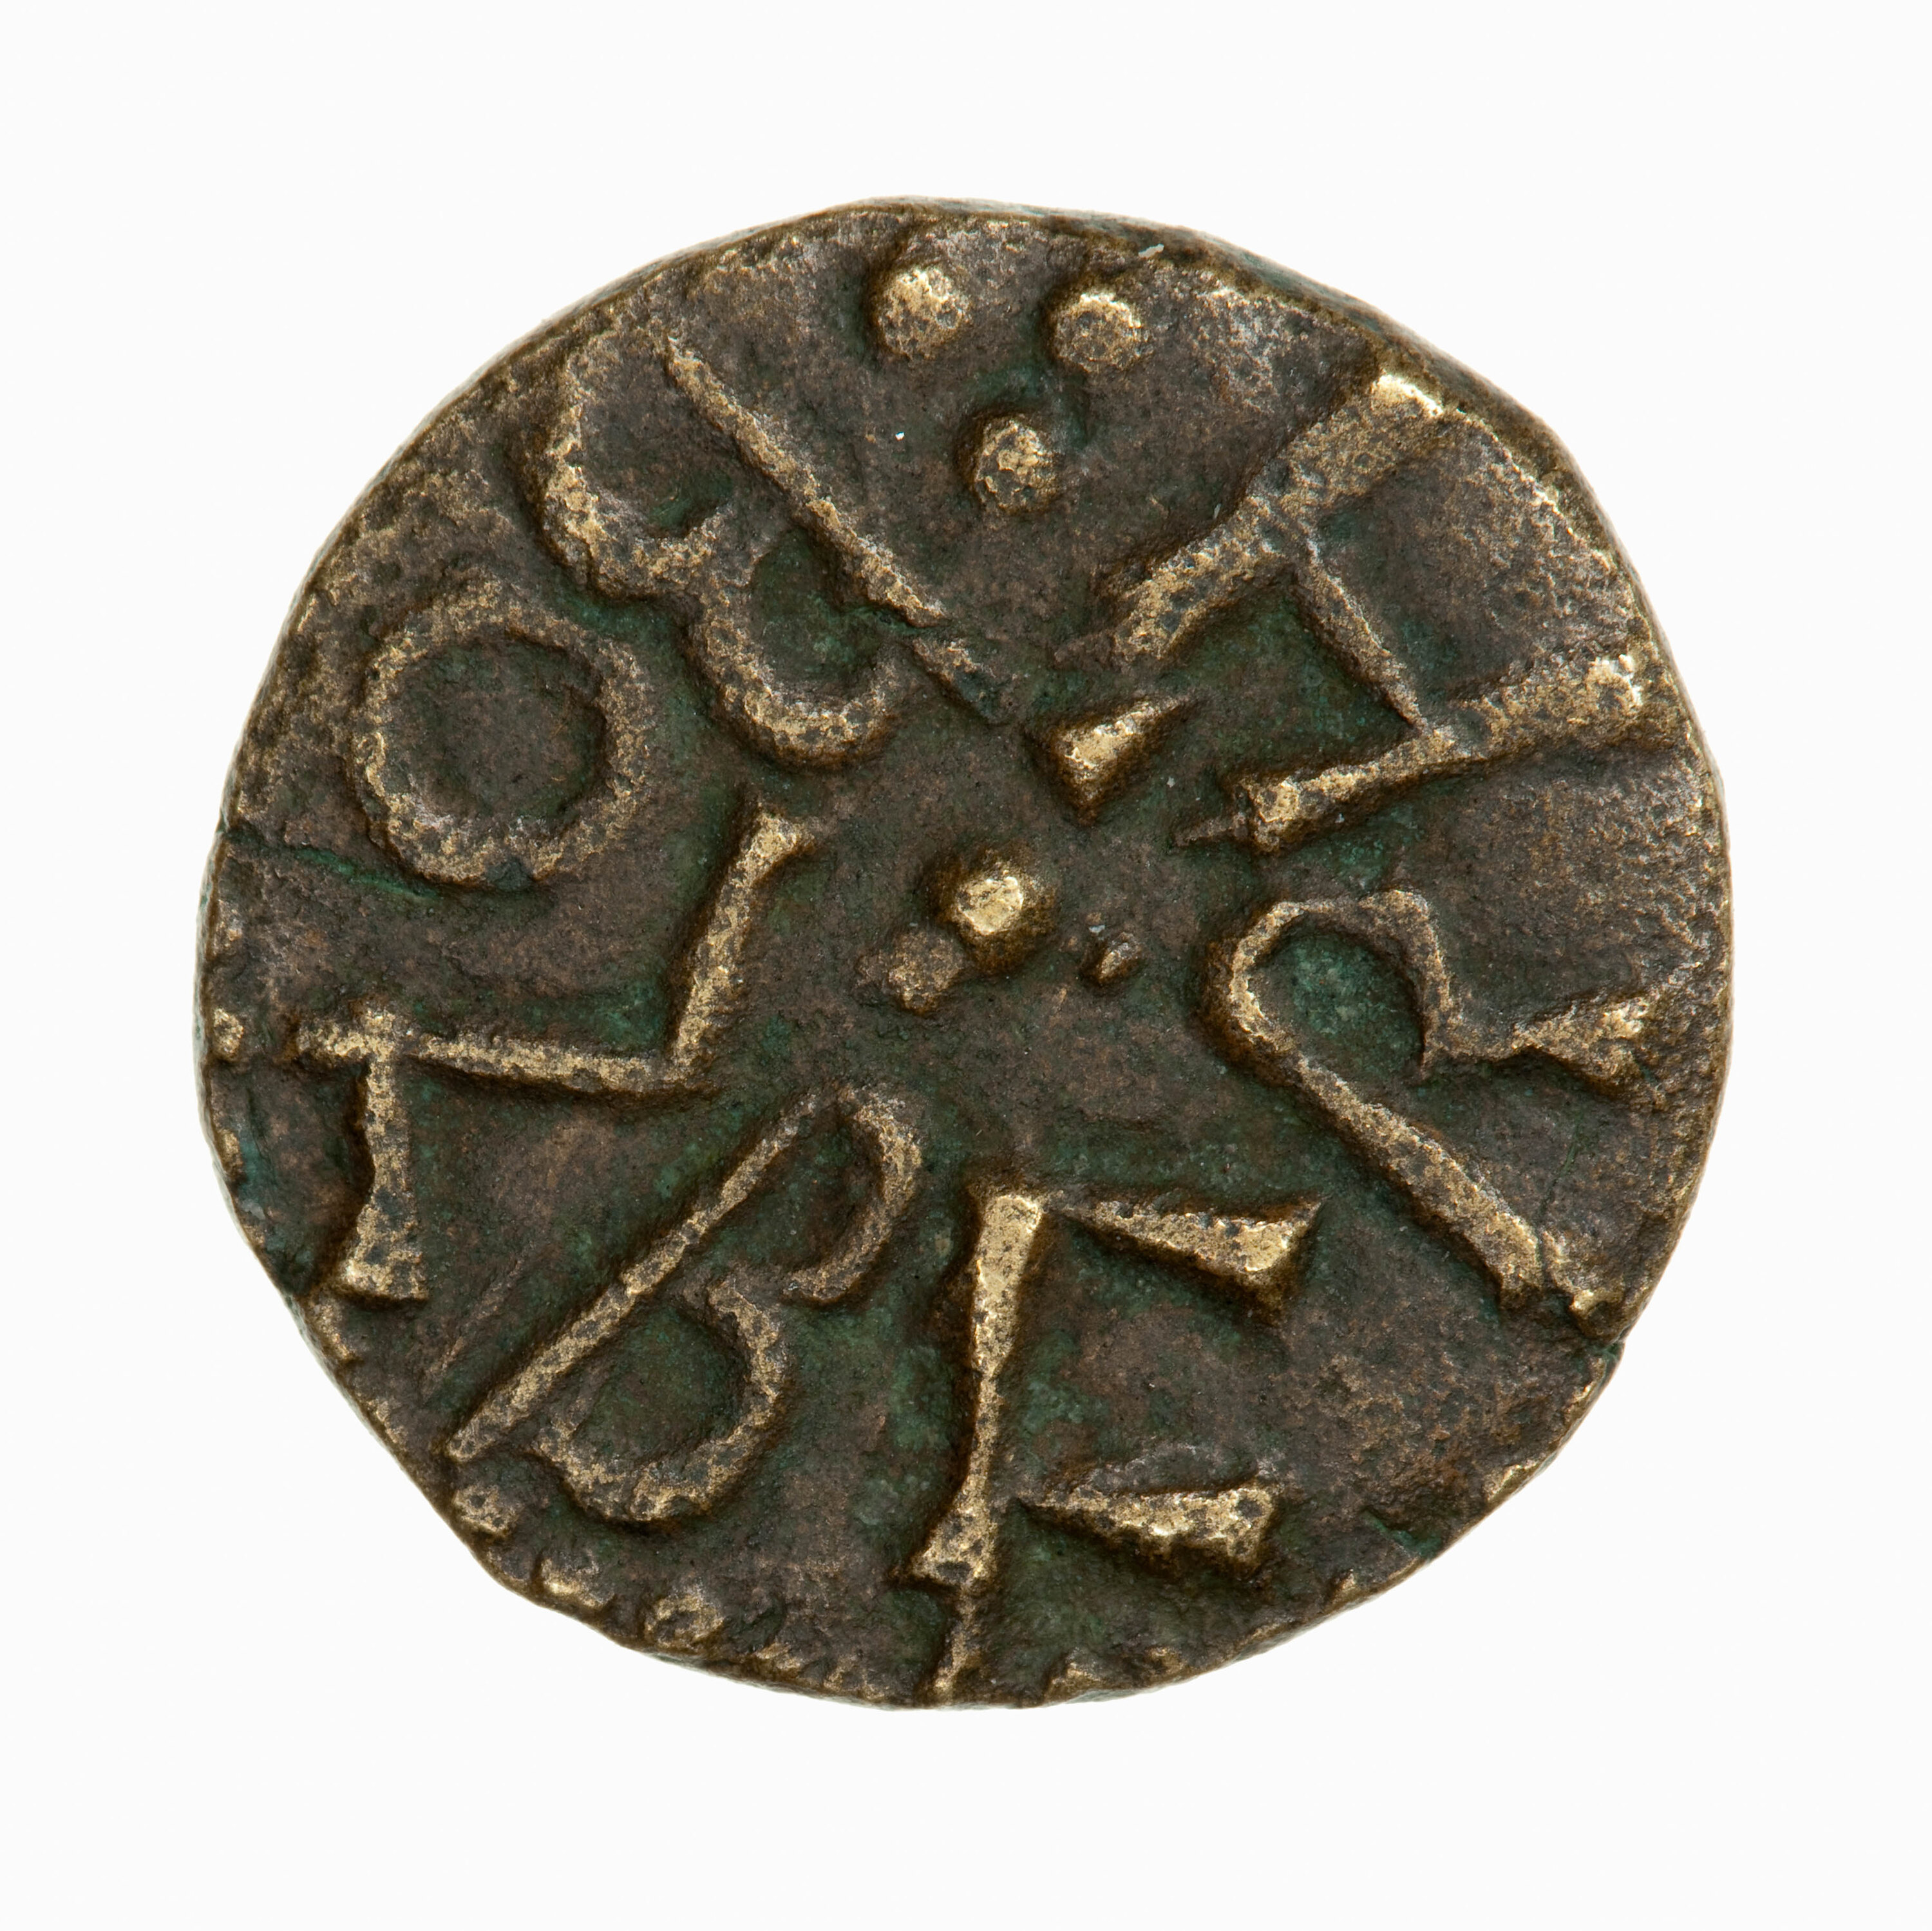 Styca, Osberht, Northumbria, England, 849-867 - Coin